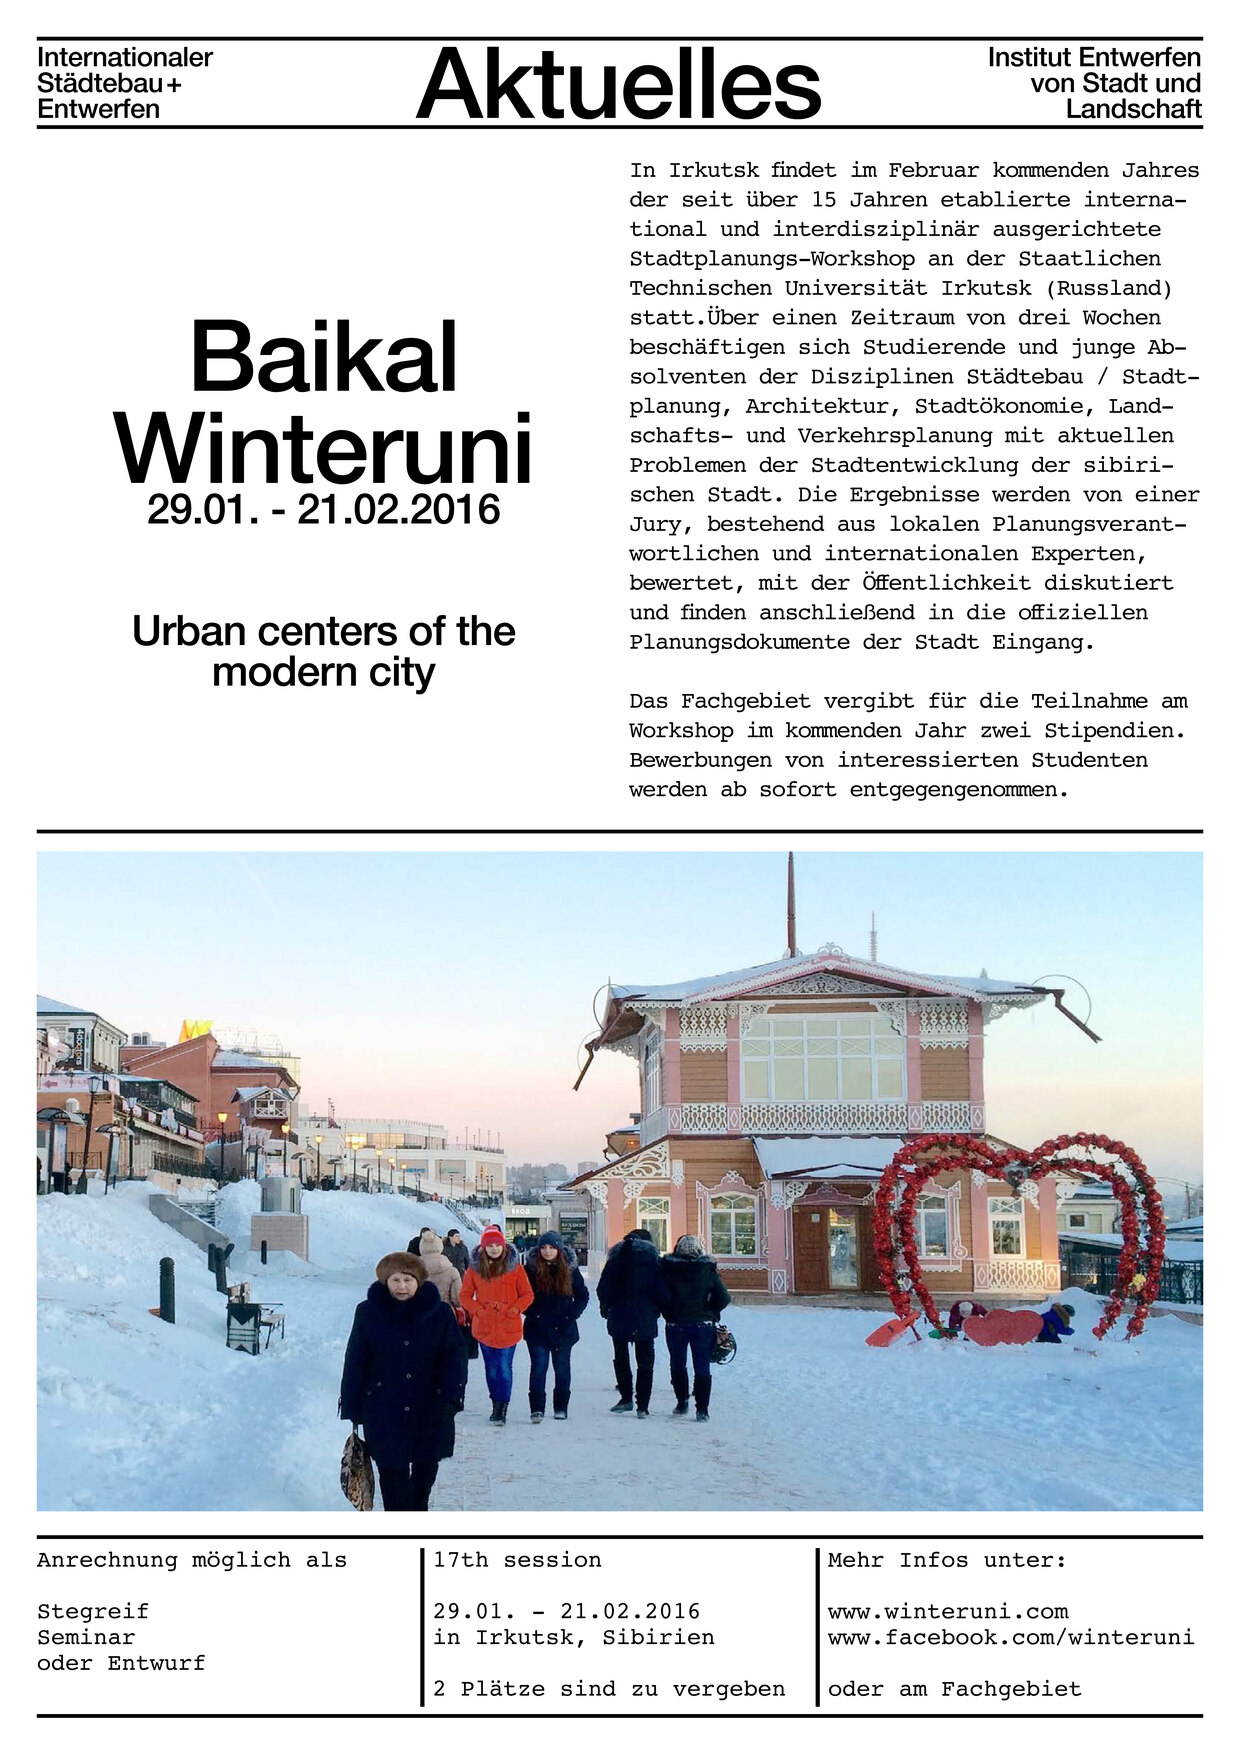 Winteruni Baikal 2016